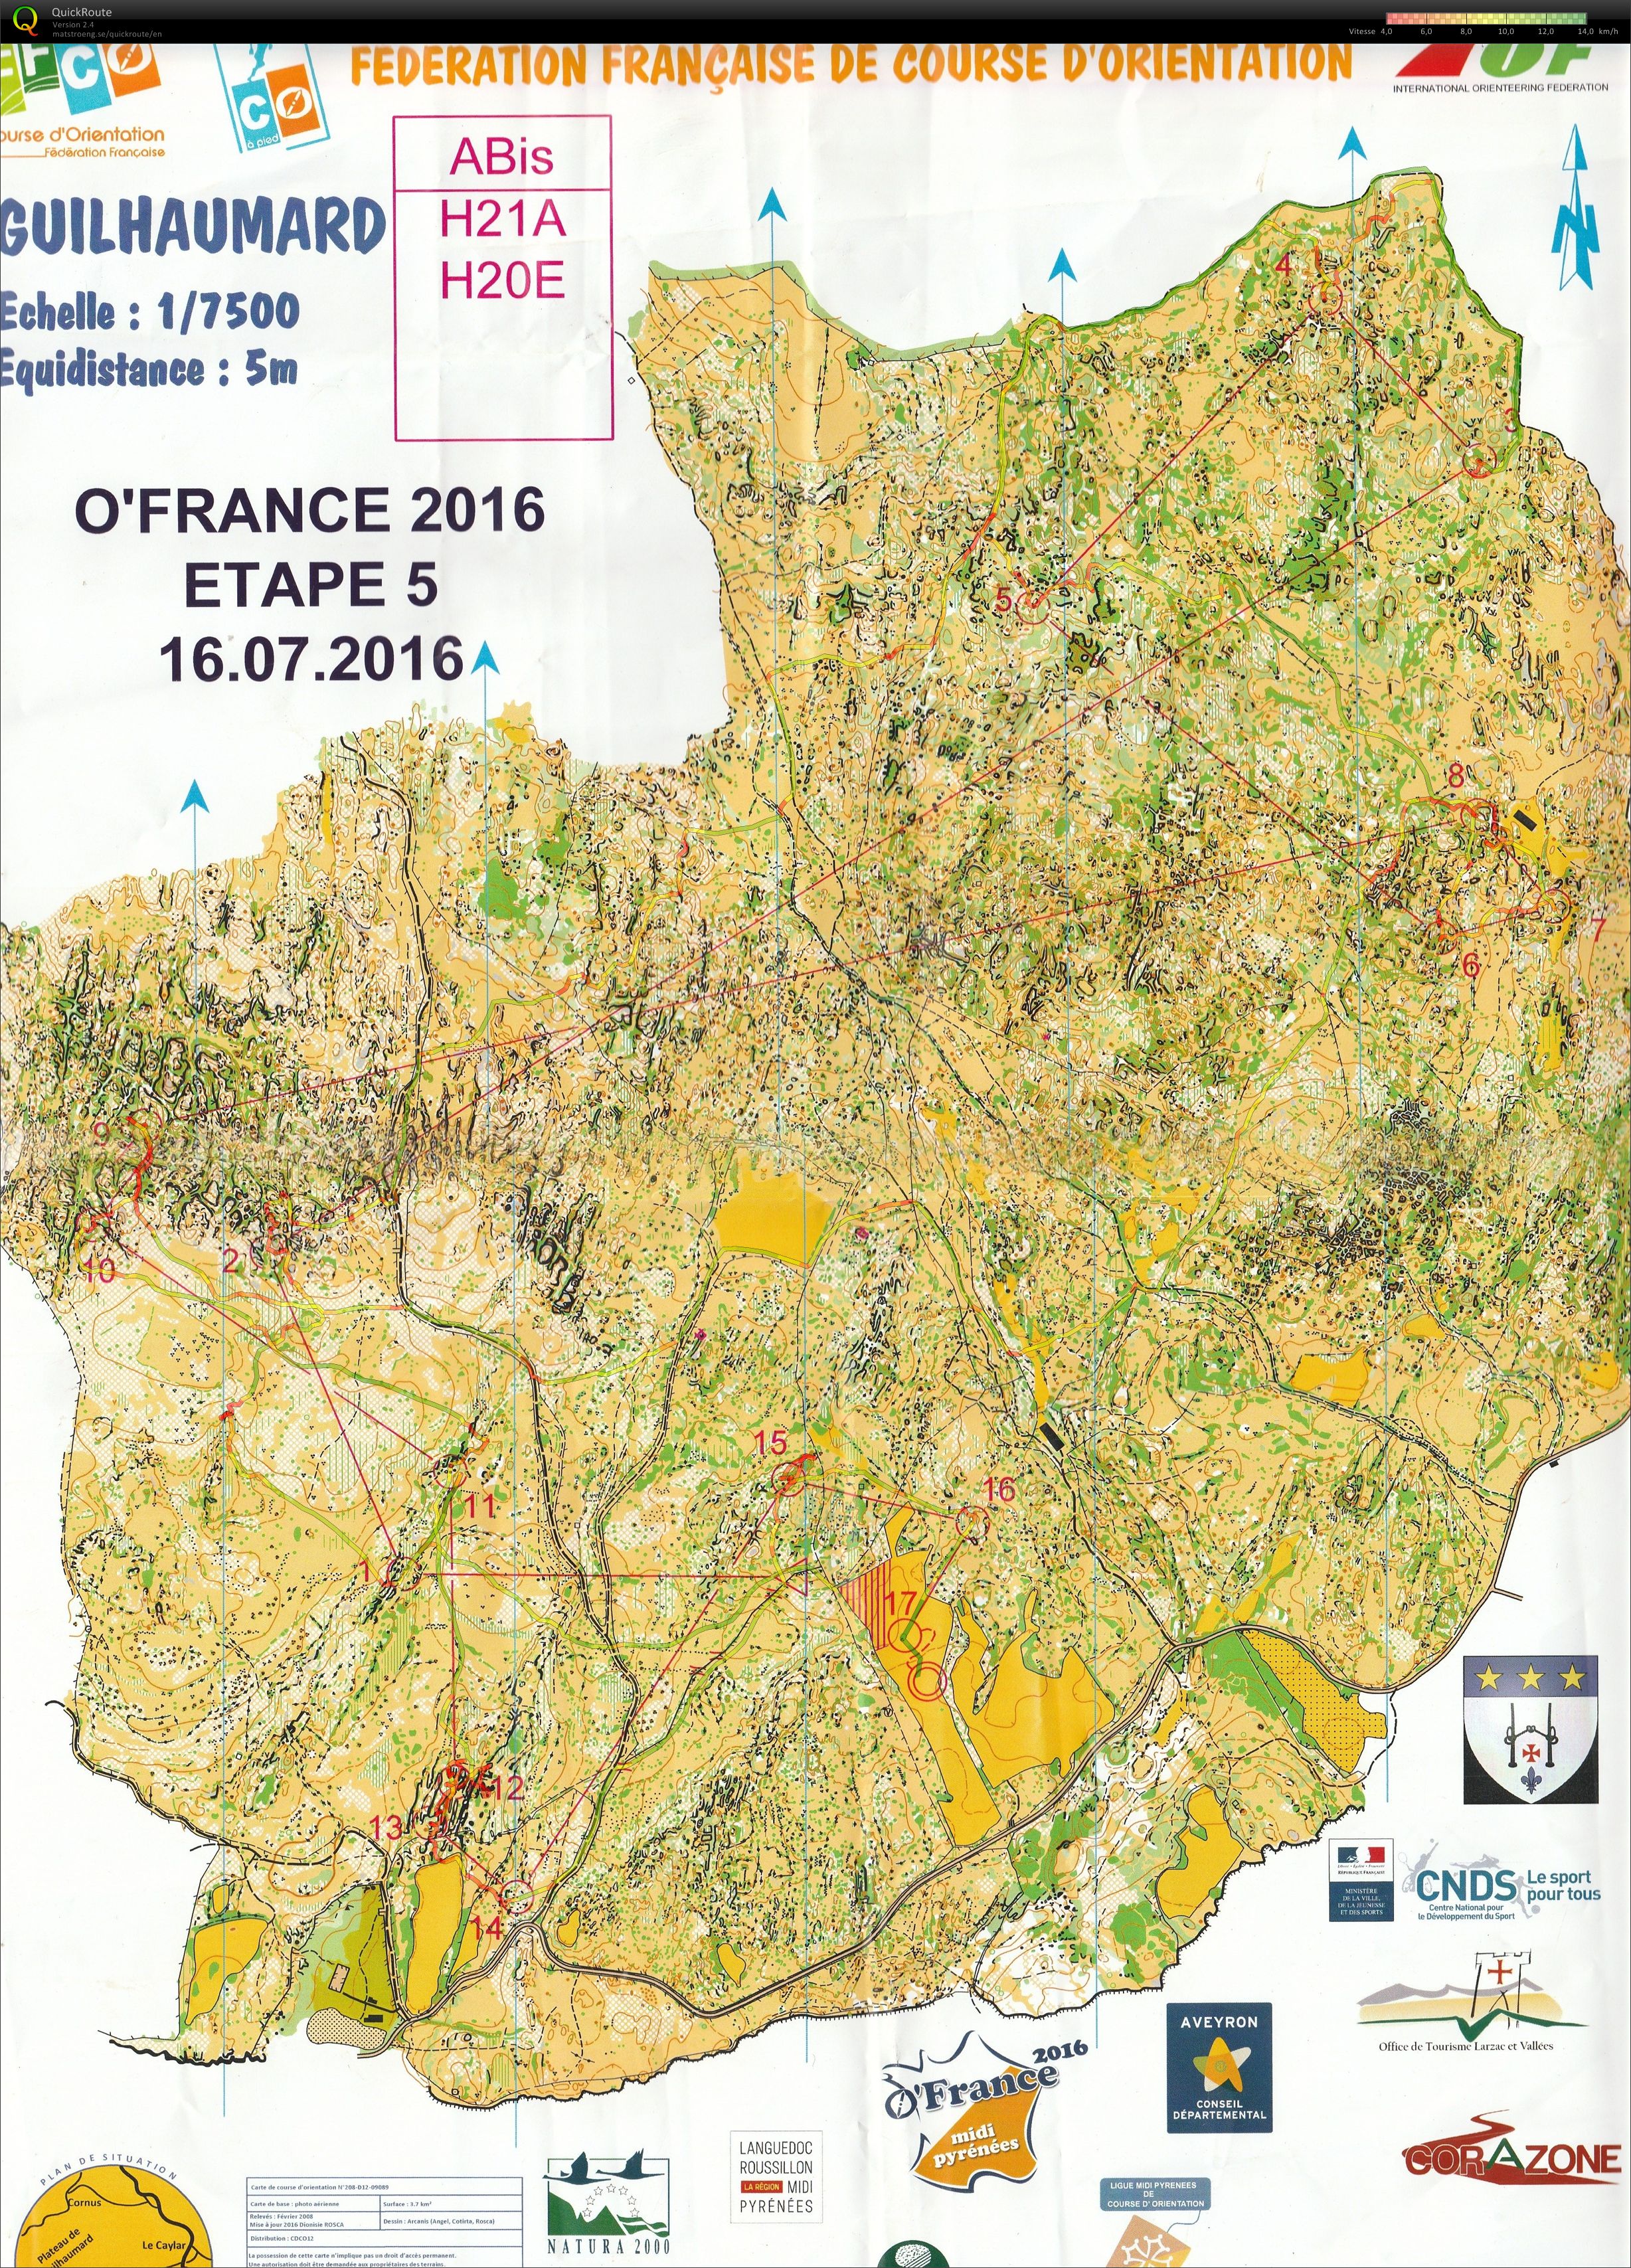 O'France Etape 5 (16/07/2016)